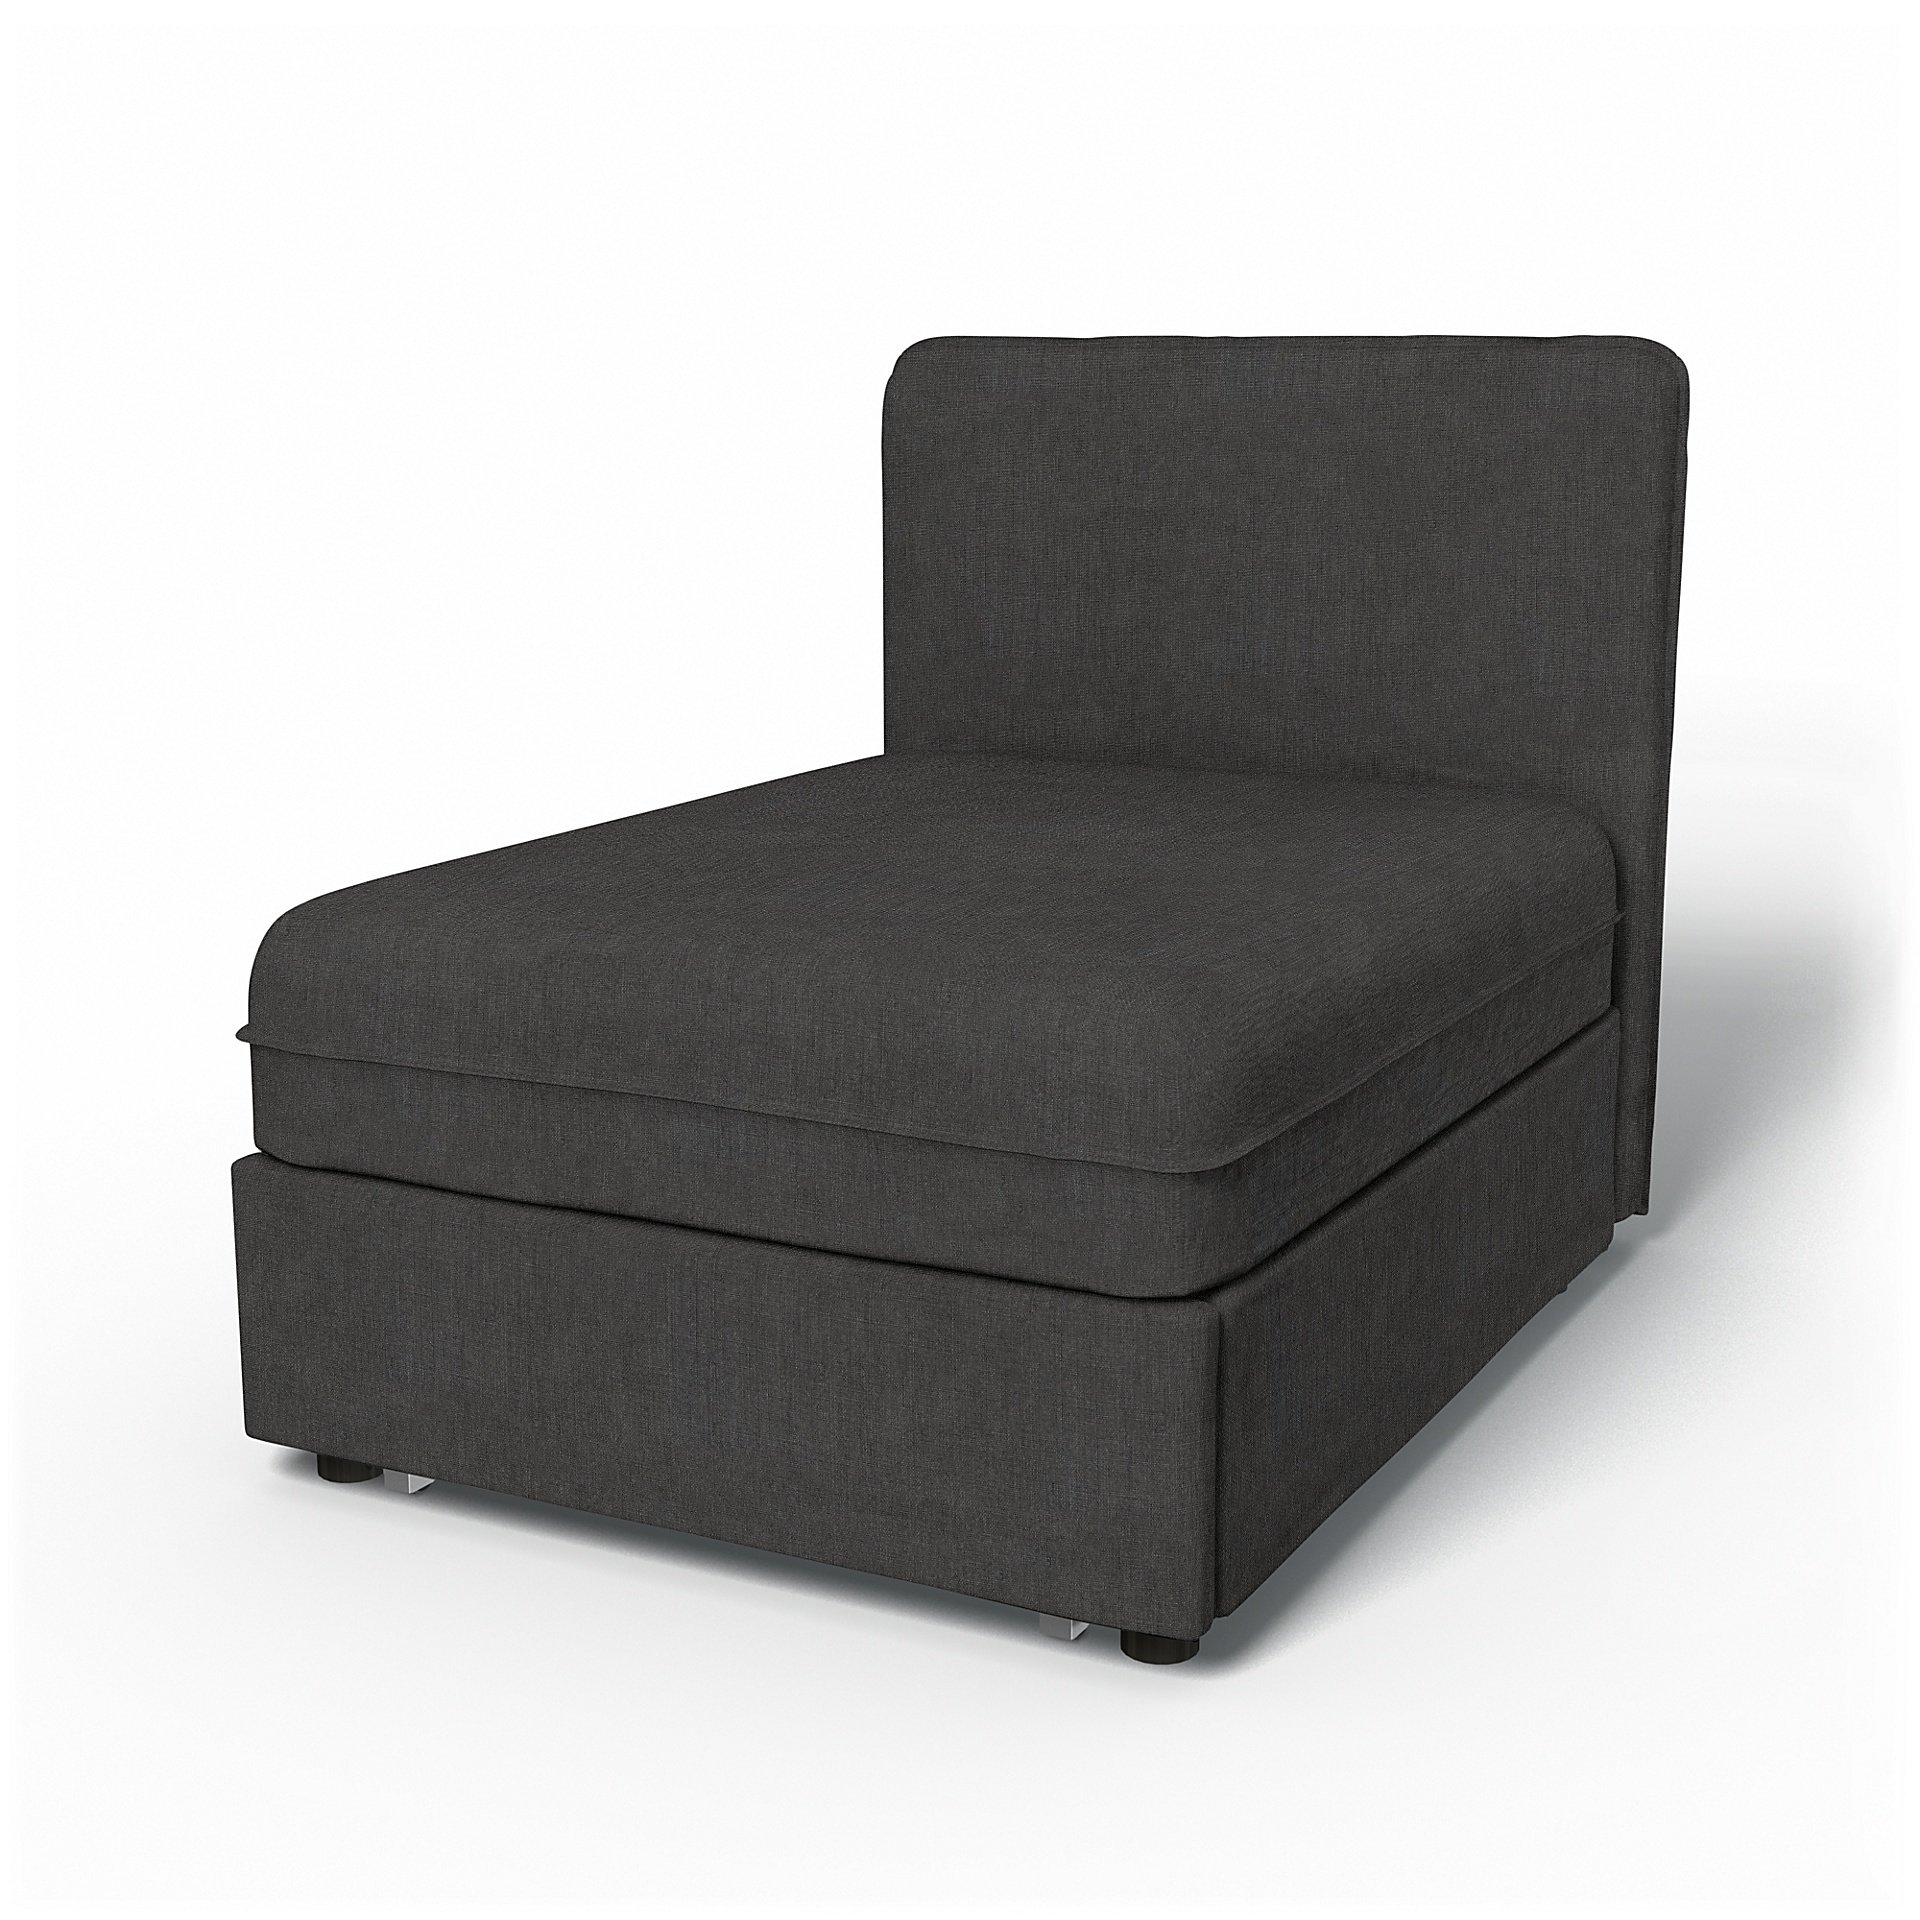 IKEA - Vallentuna Seat Module with Low Back Sofa Bed Cover 80x100 cm 32x39in, Espresso, Linen - Bemz